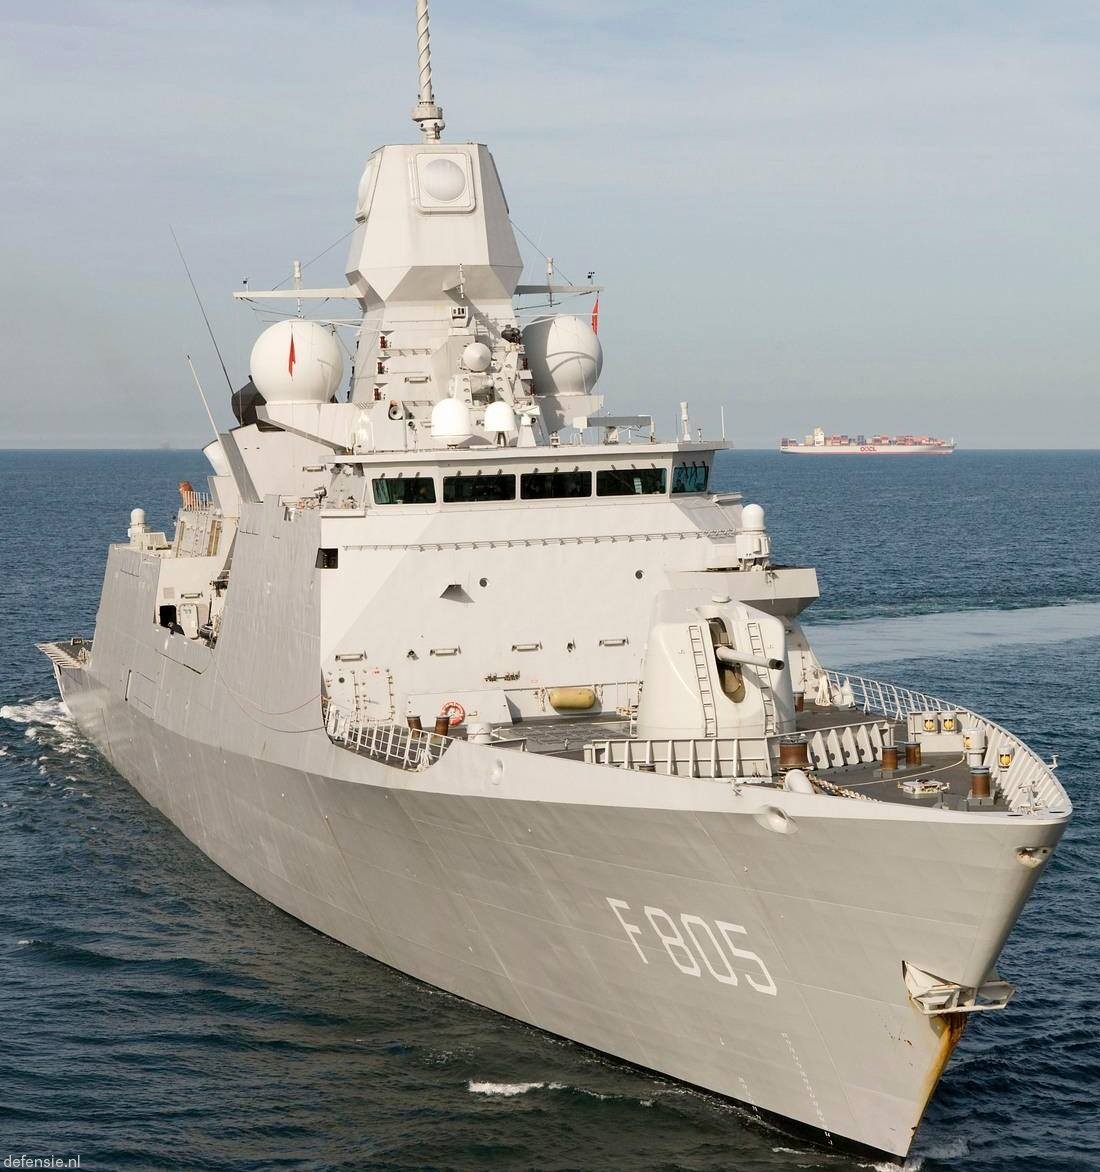 f-805 hnlms evertsen guided missile frigate ffg lcf royal netherlands navy 20